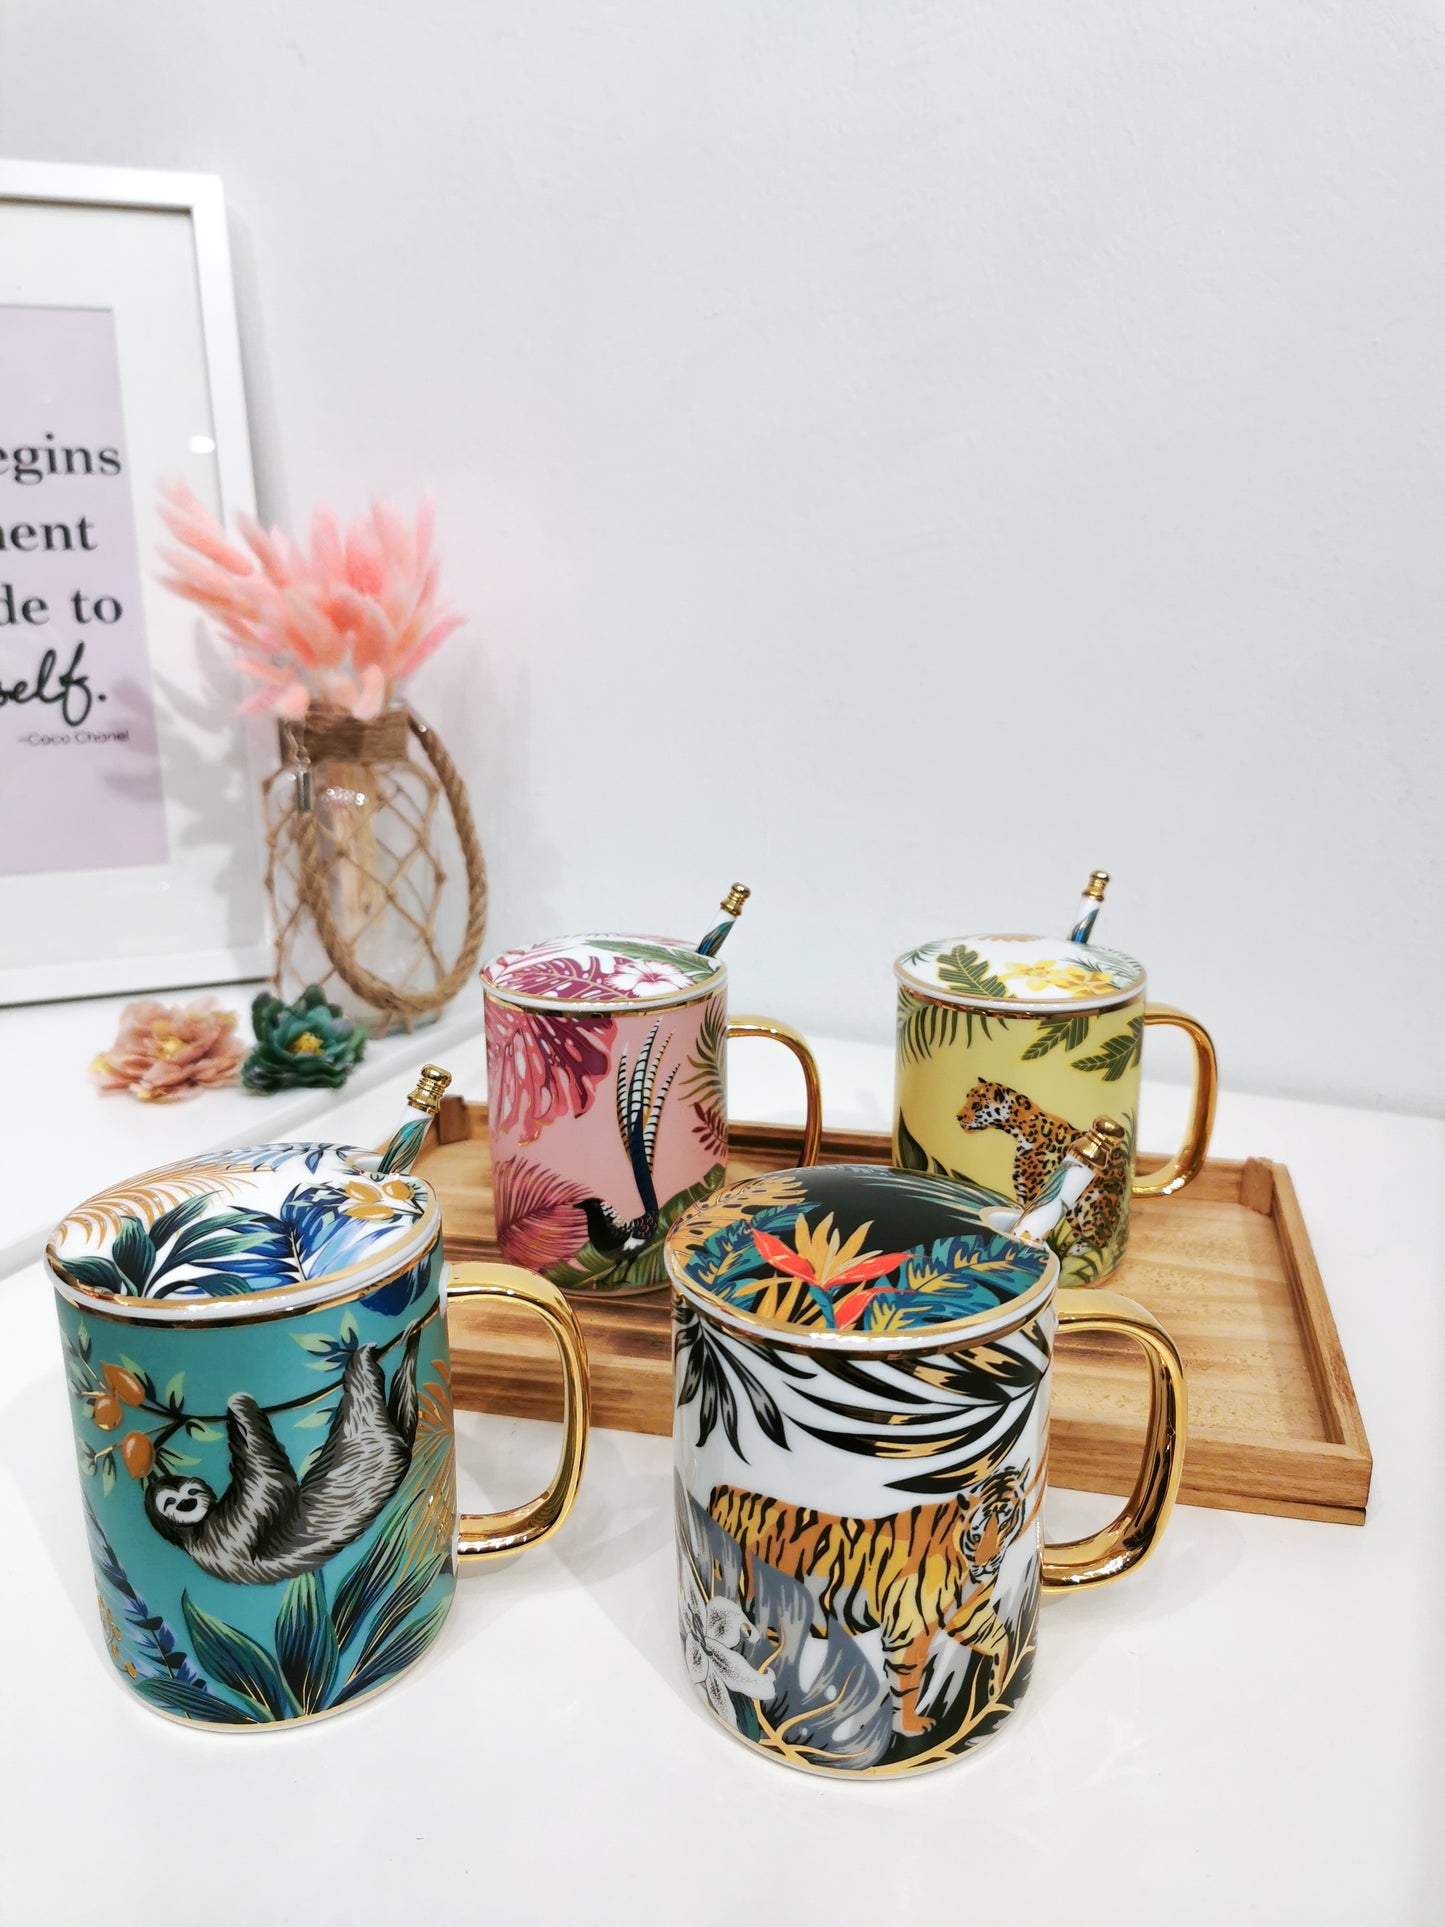 350ml Forest City Ceramic Mug Set - Sloth - Gifts by Art Tree